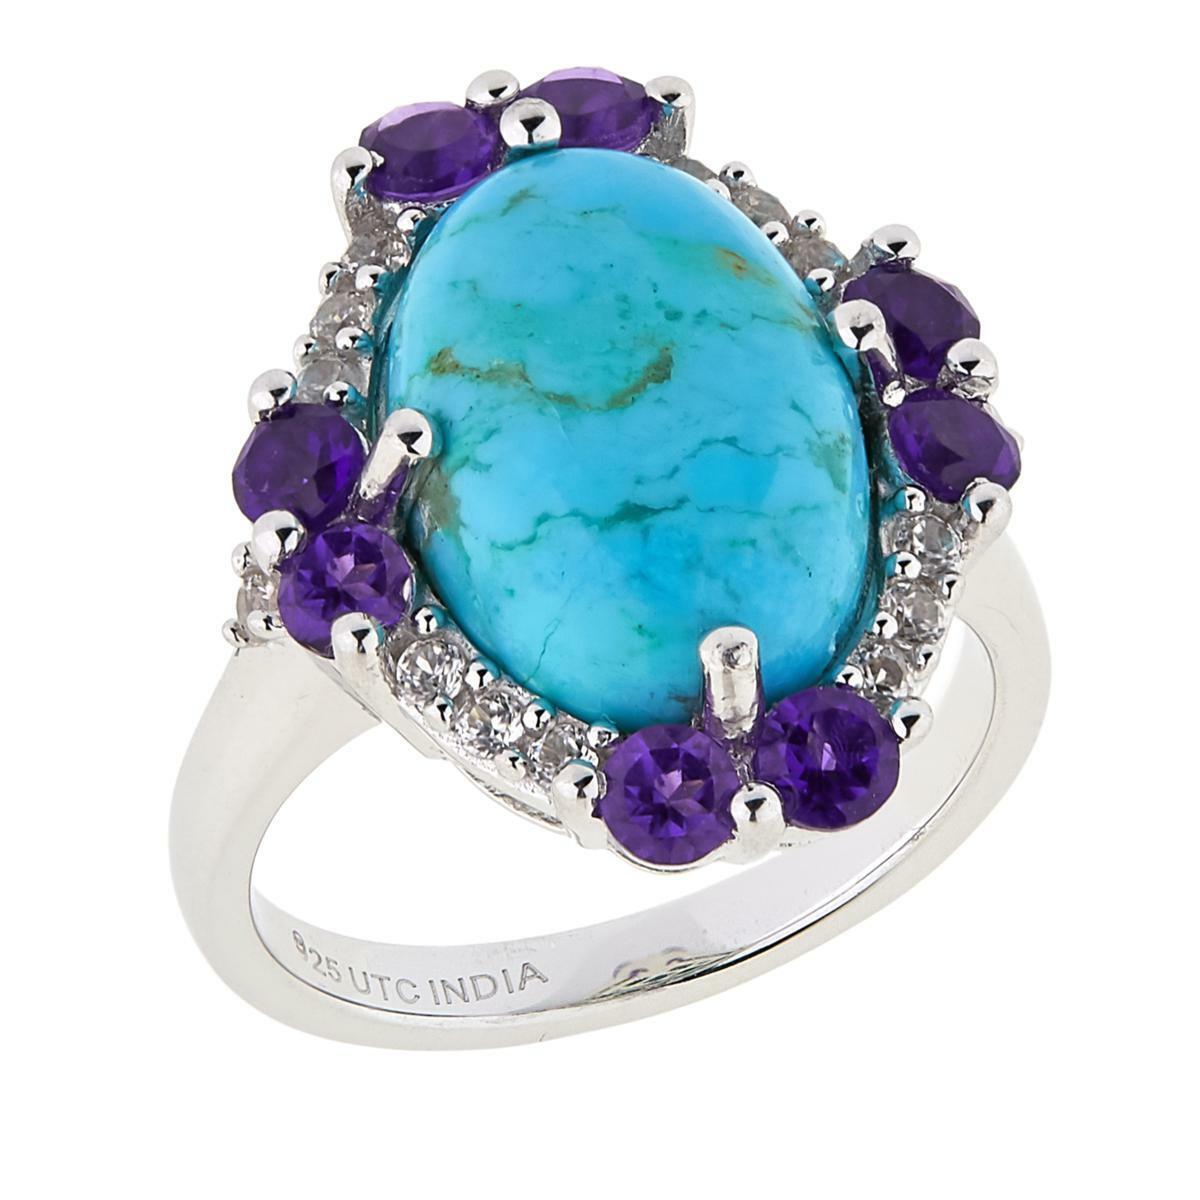 Paul Deasy Gem Kingman Turquoise, Amethyst and White Zircon Ring Size 7 HSN $136